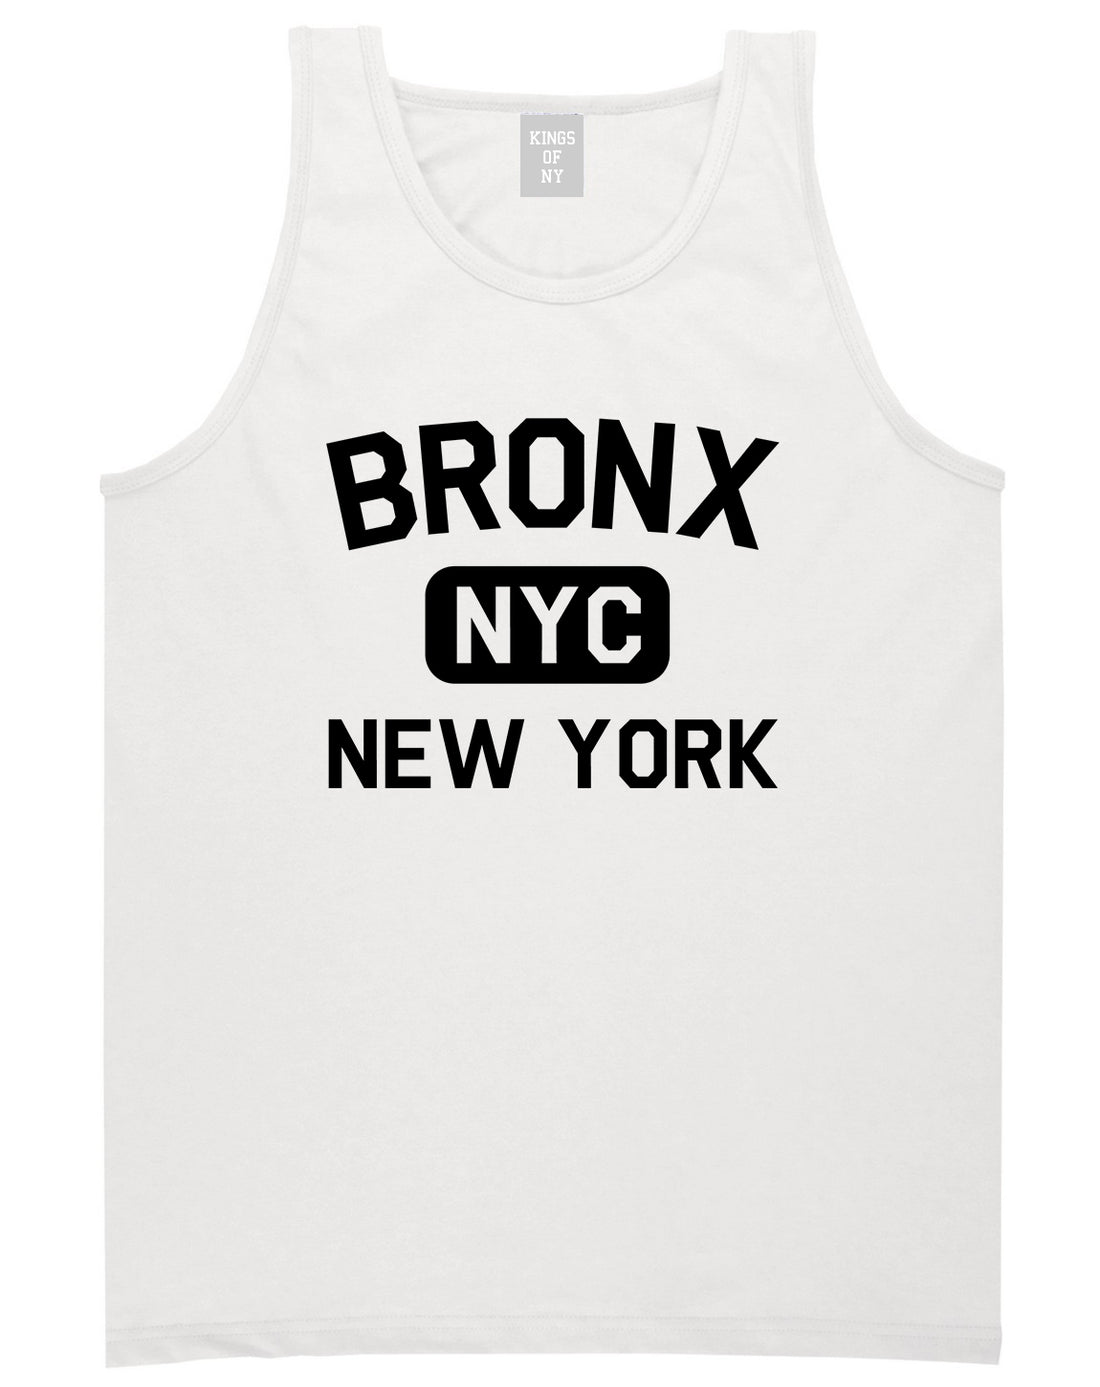 Bronx Gym NYC New York Mens Tank Top T-Shirt White